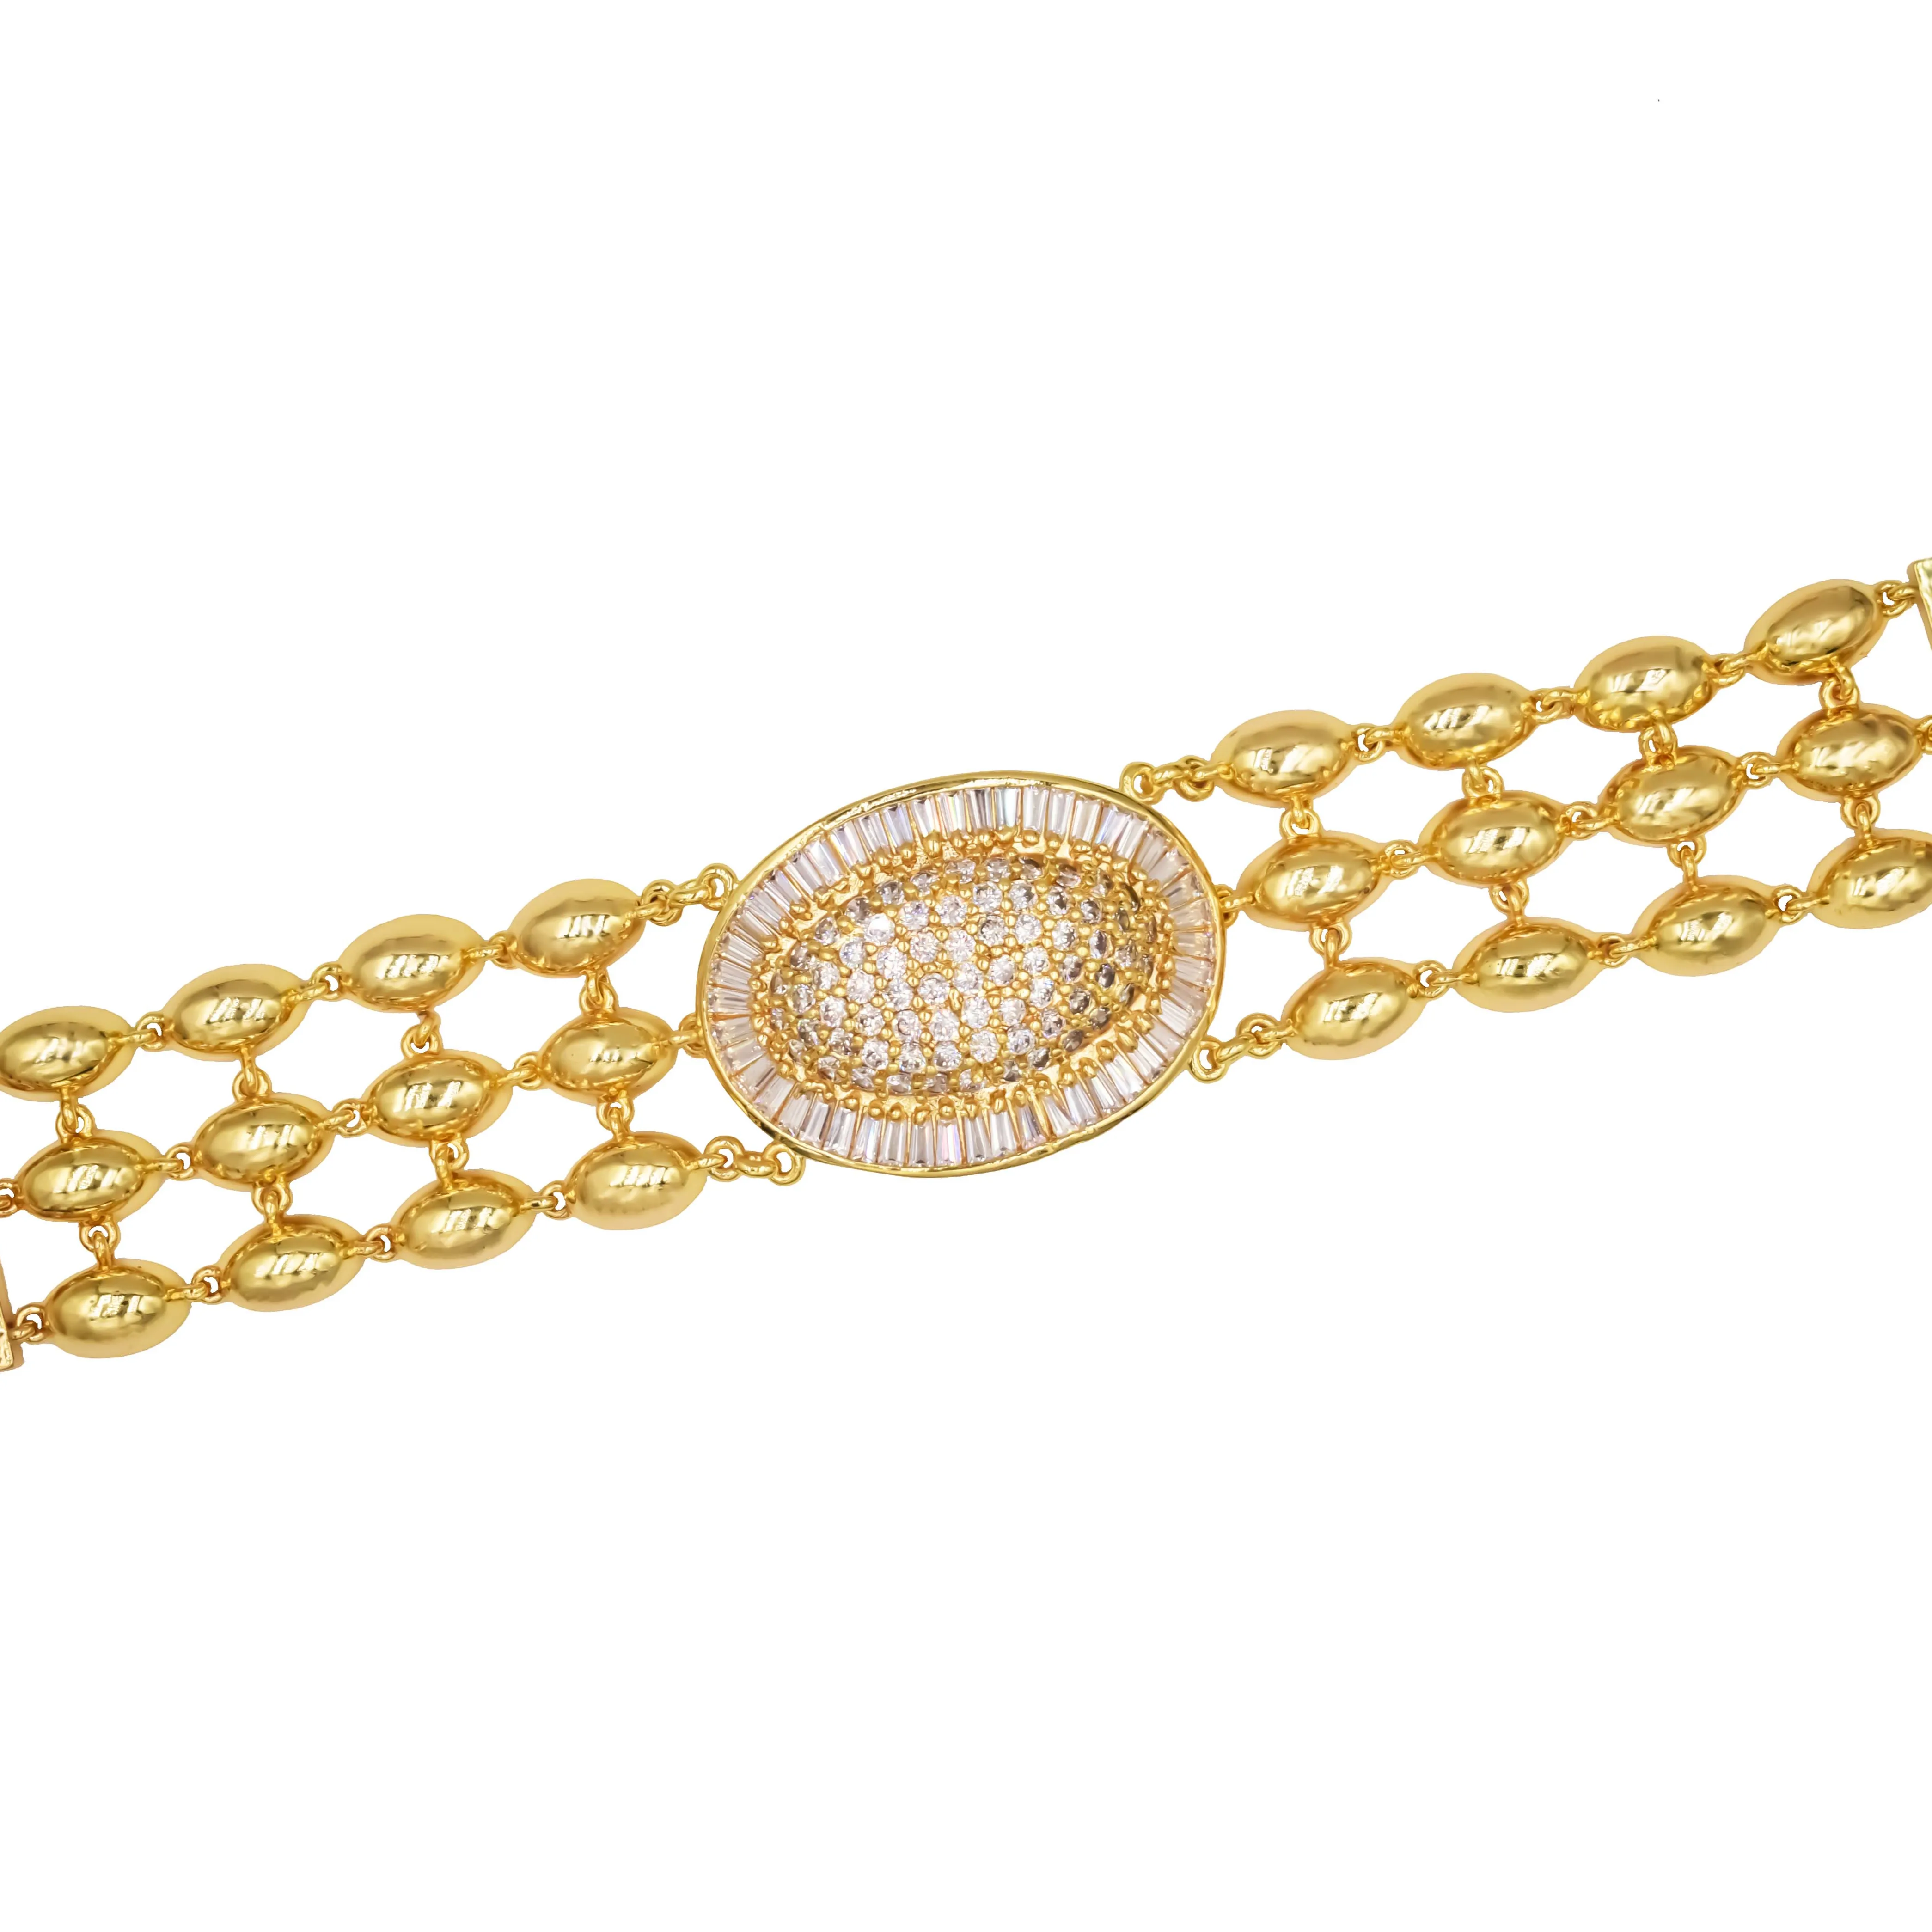 Manufactures Jewelry Zircon Creatire Designer Jewelry Classic Vintage Fashion 18k Gold Charm Bracelets